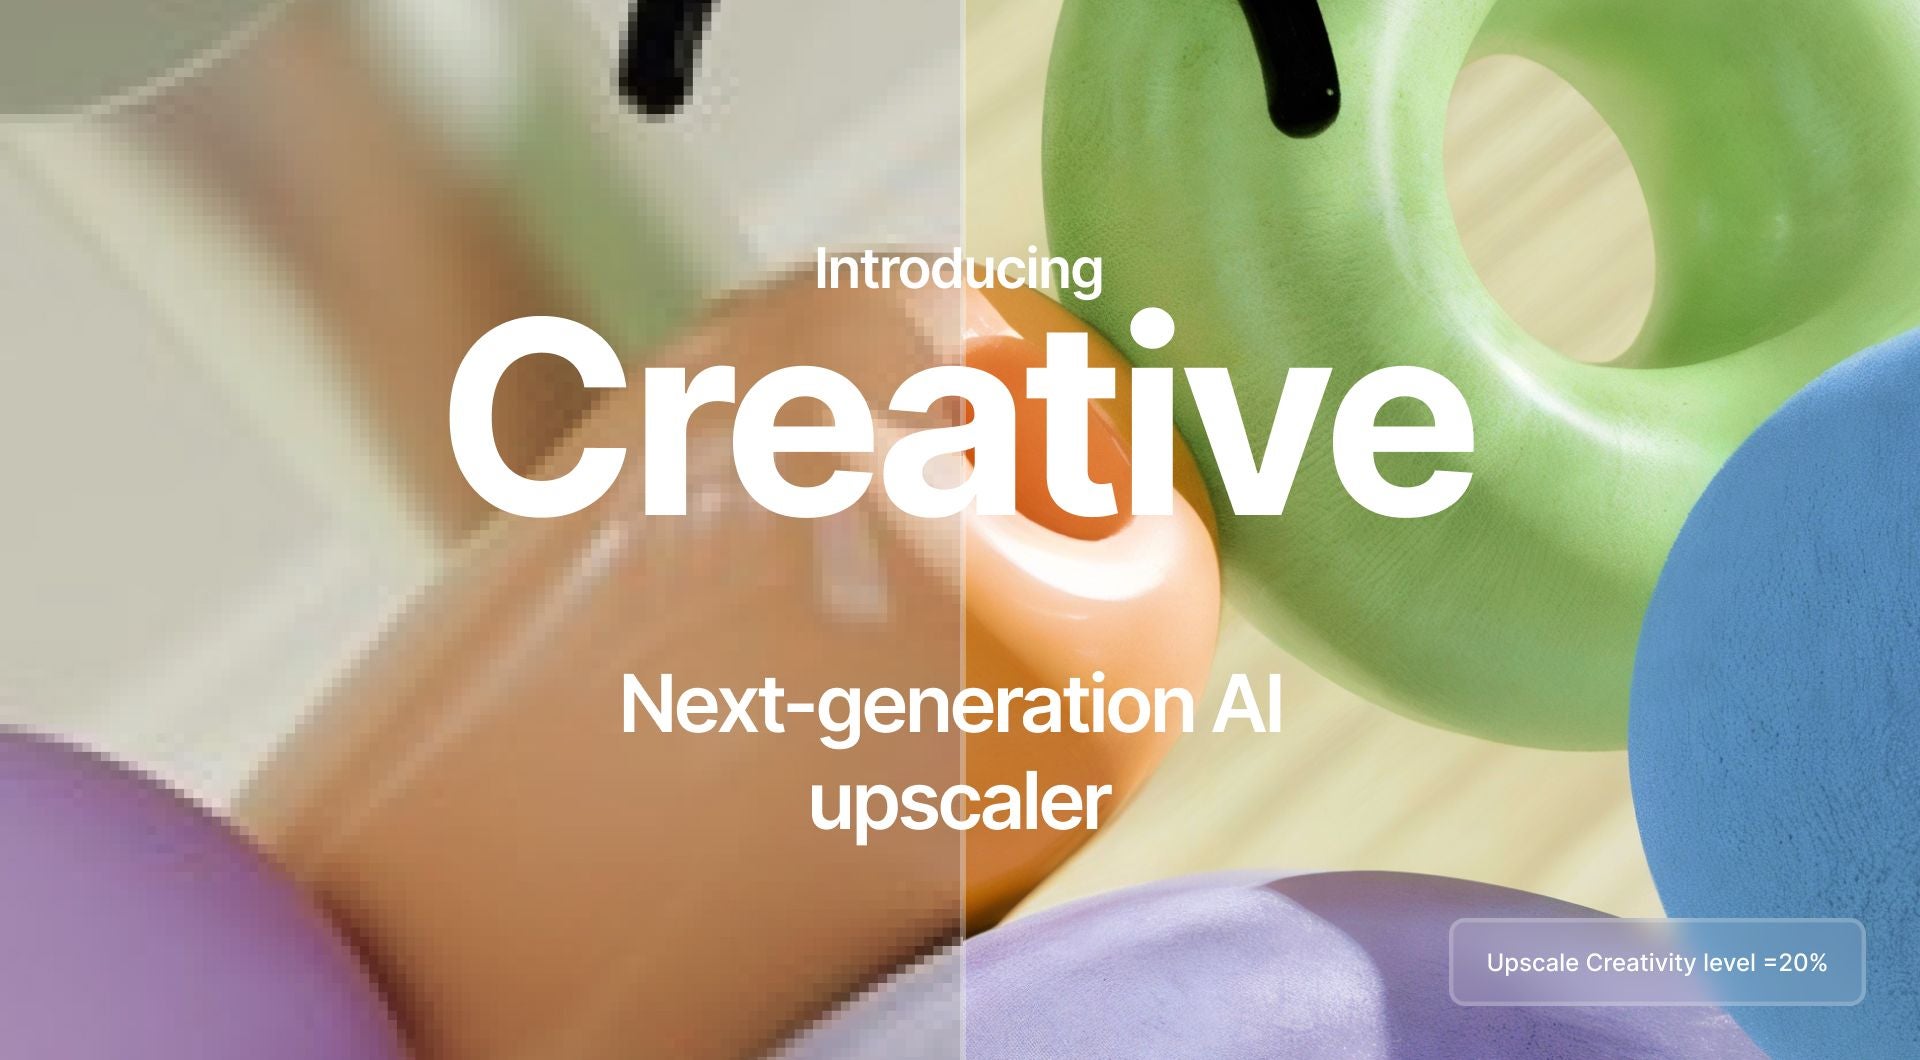 Meet "Creative": Enhance your images with next-gen AI upscaling